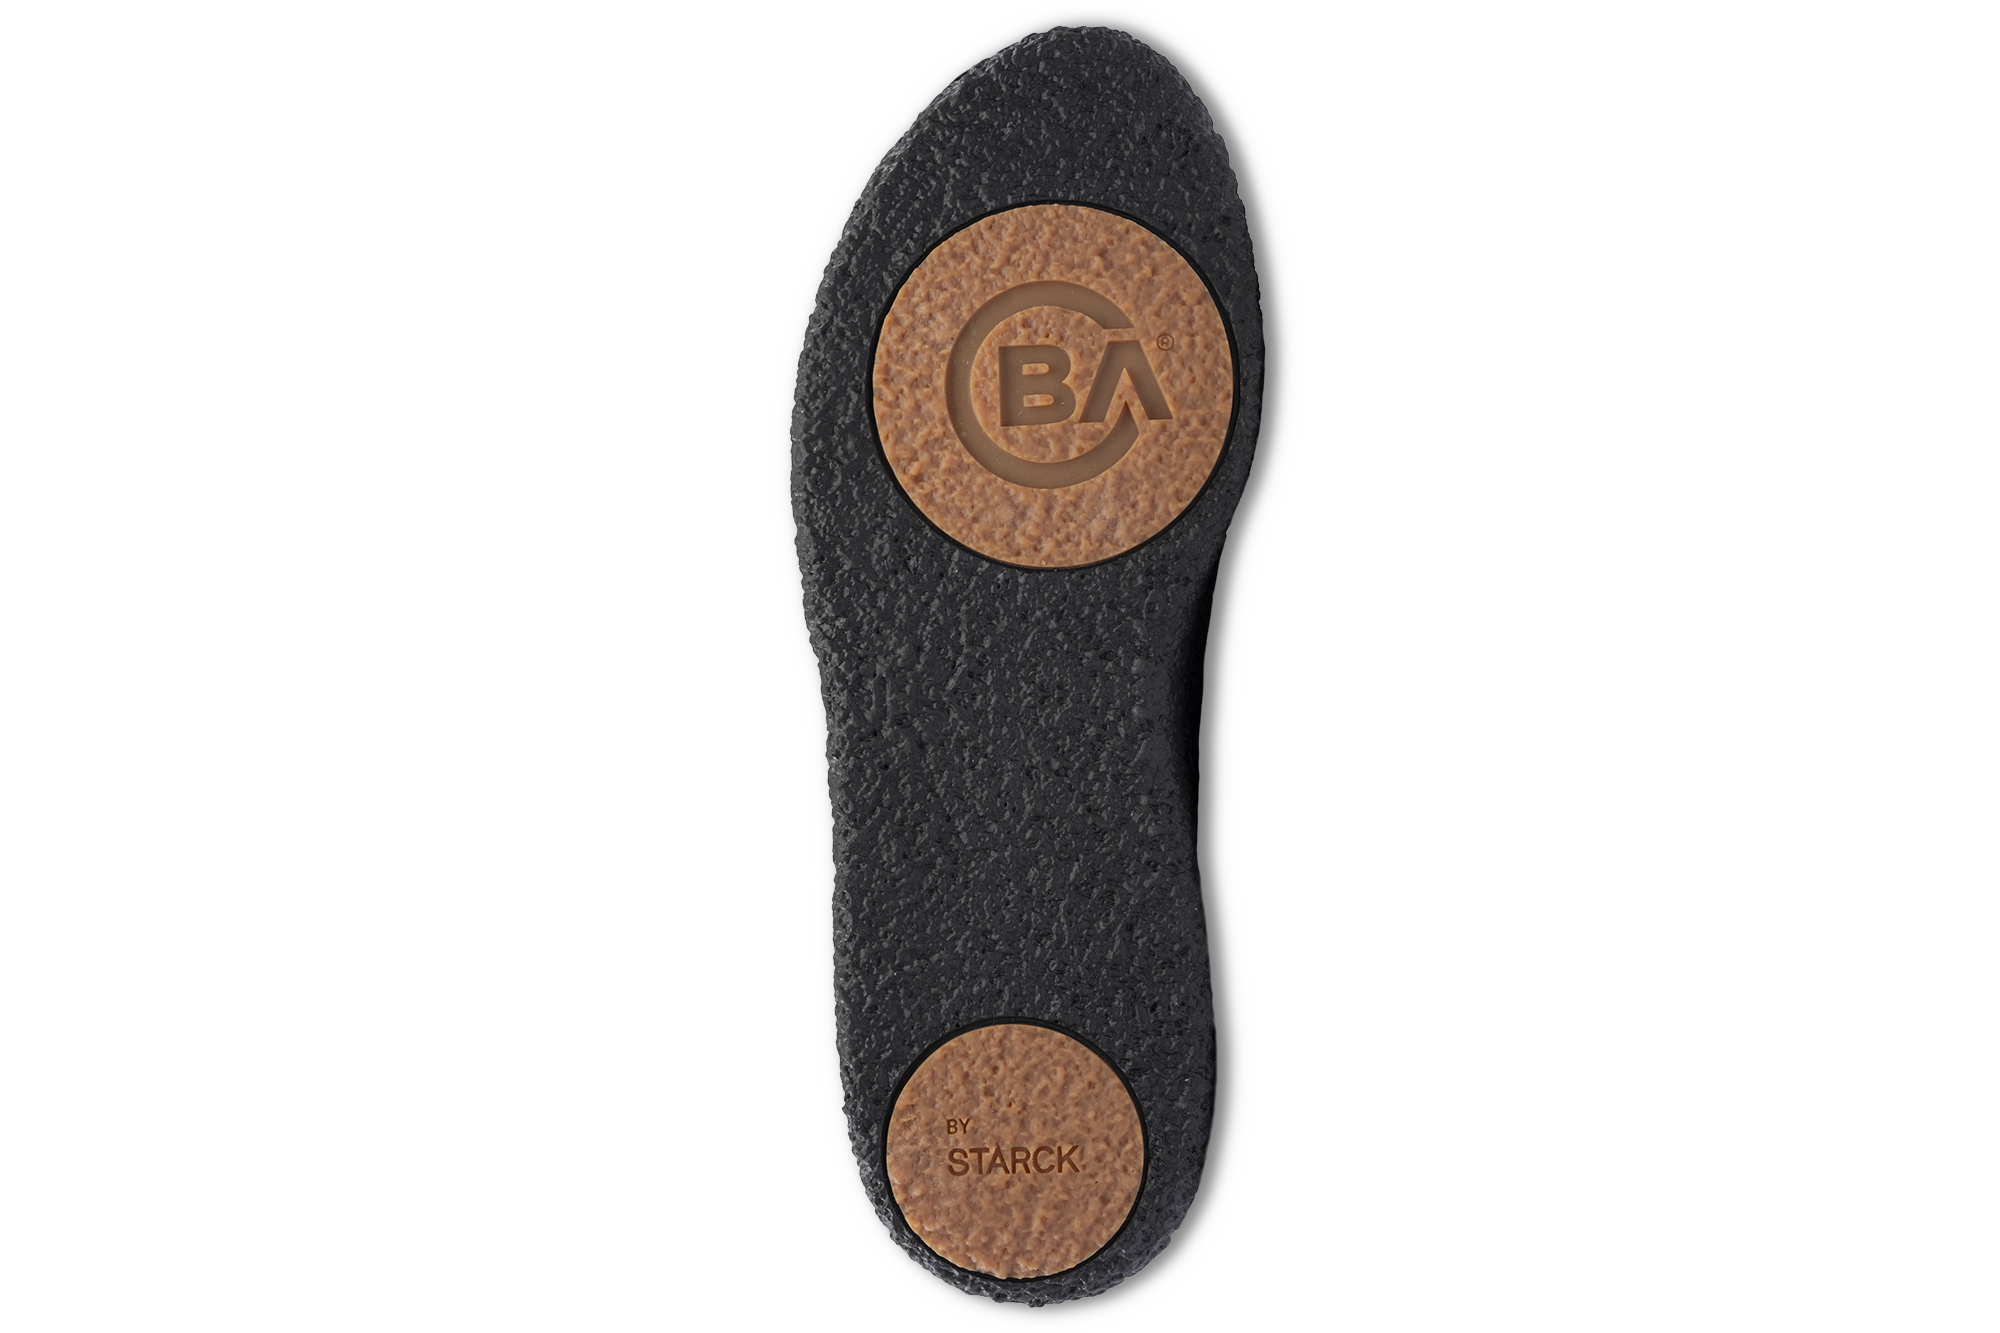 Baliston Smart Shoe Black and beige sole